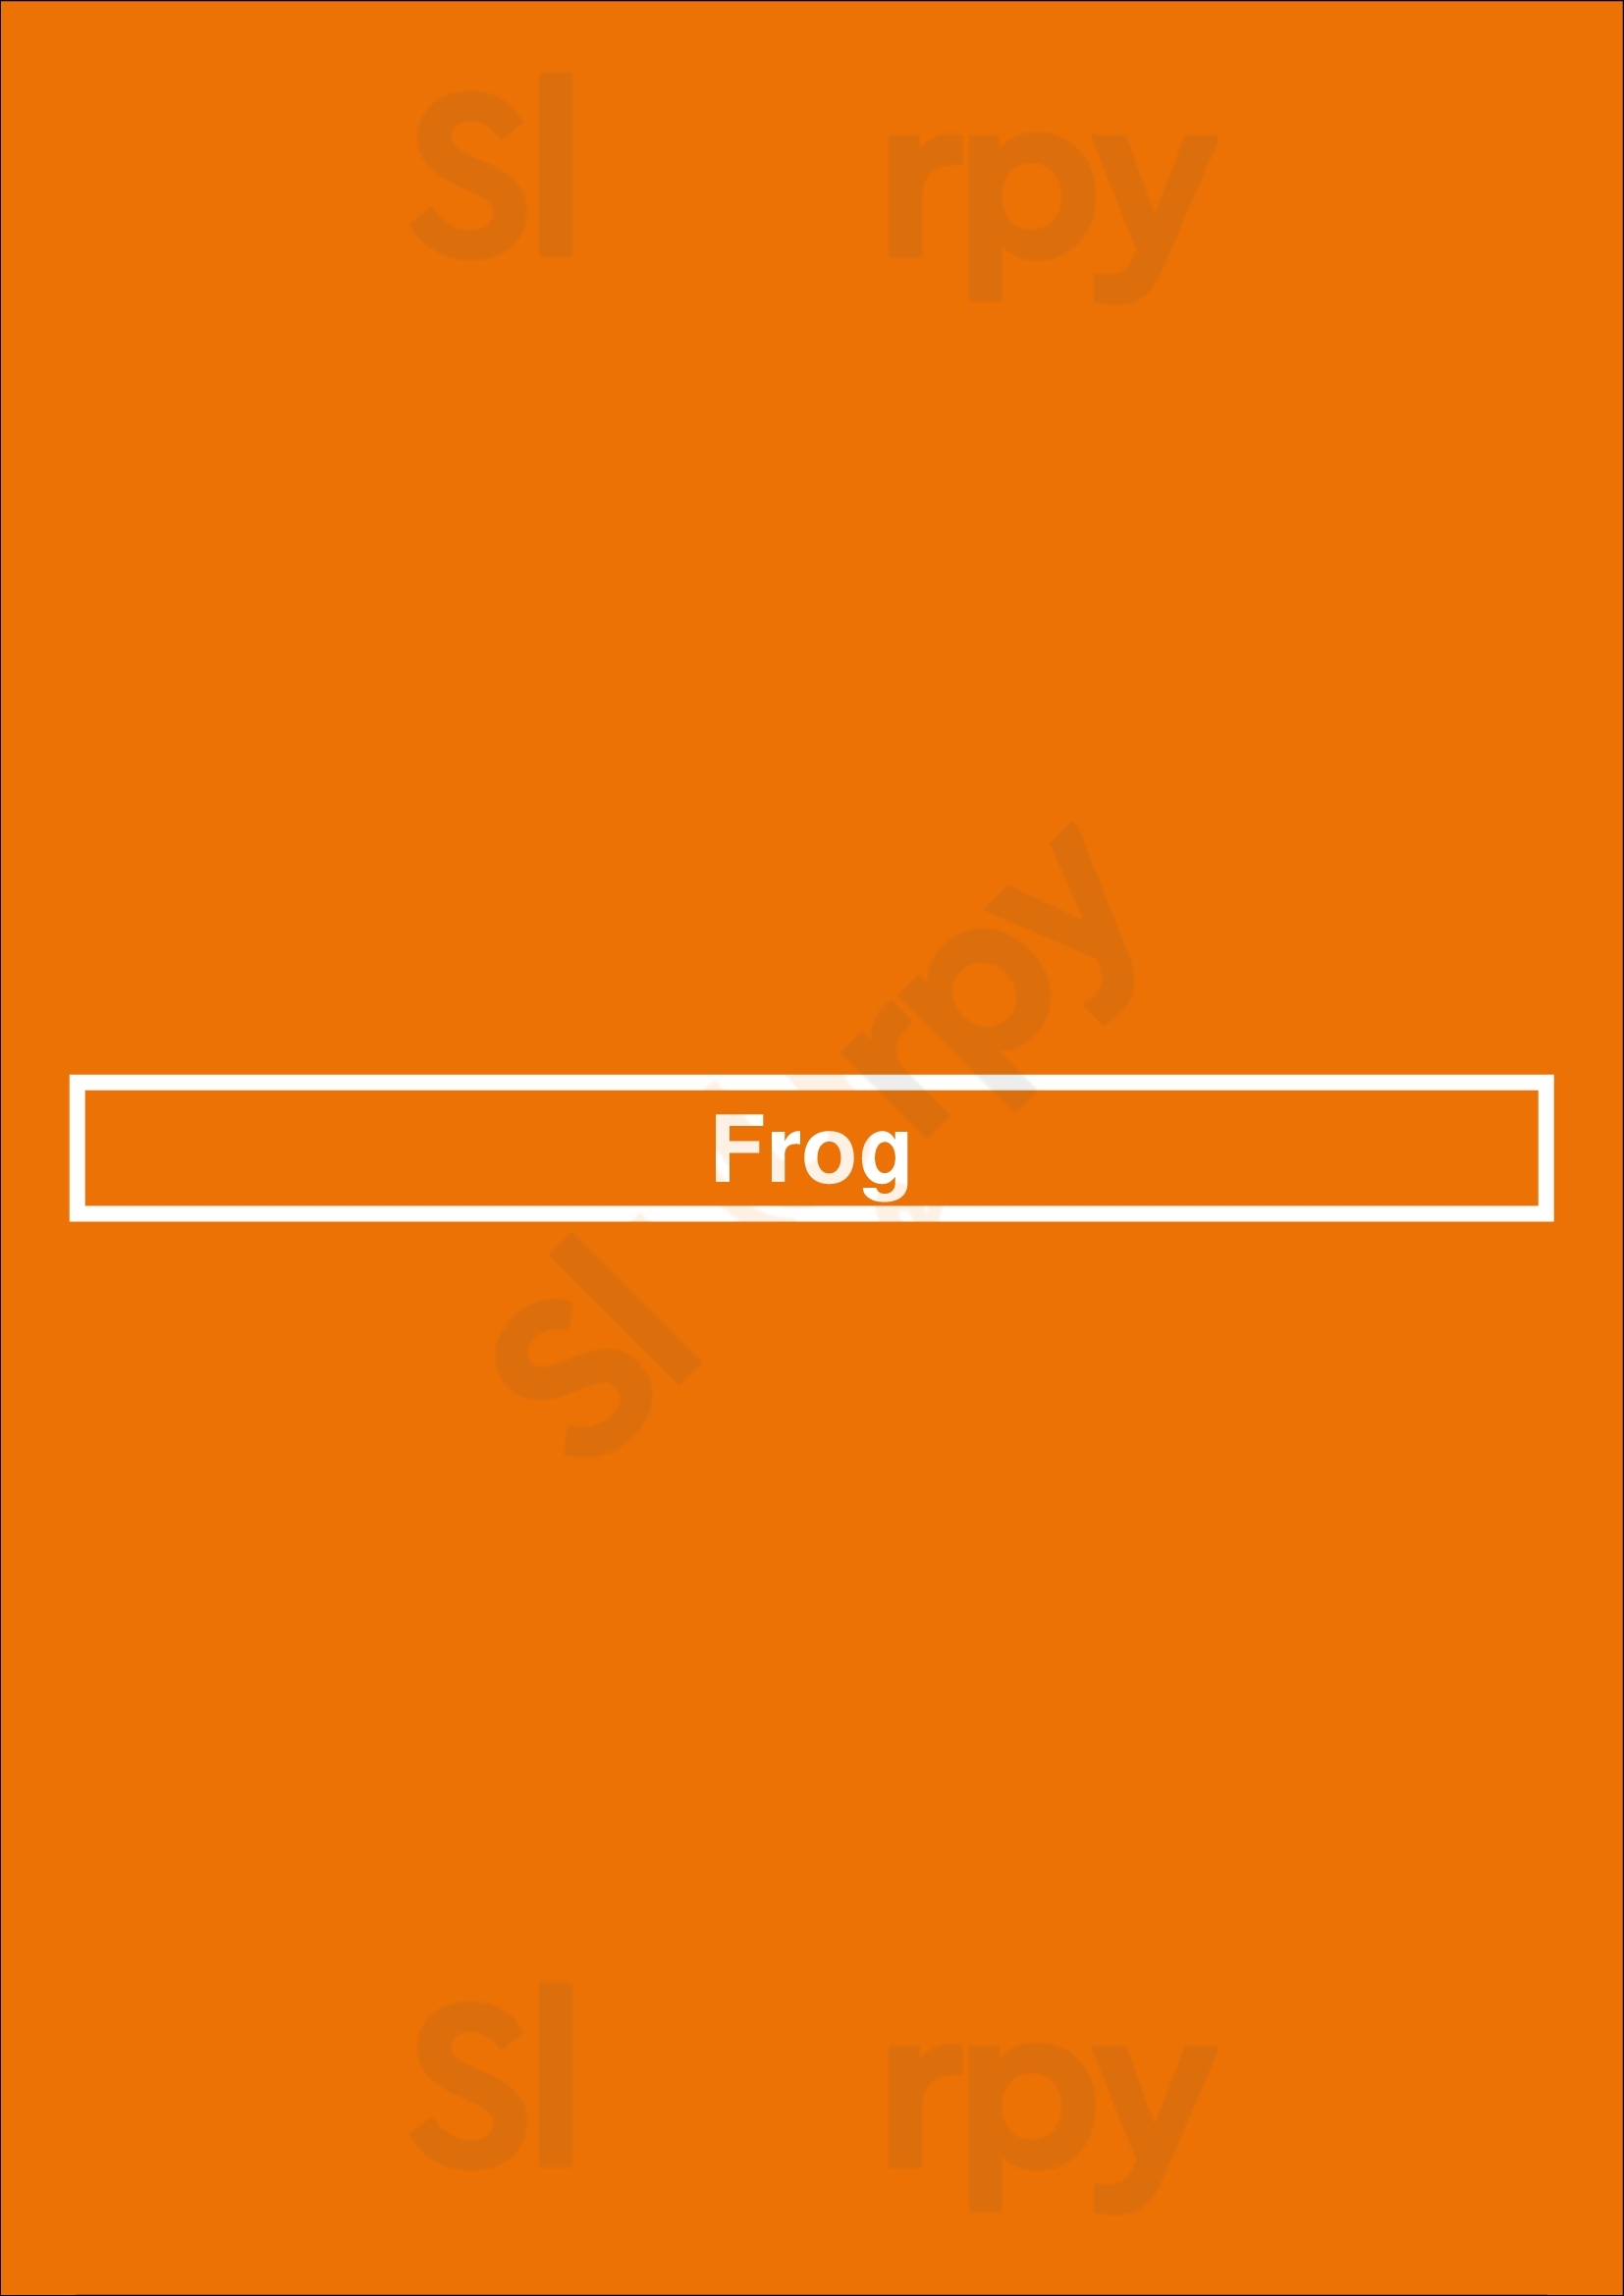 Frog Los Angeles Menu - 1